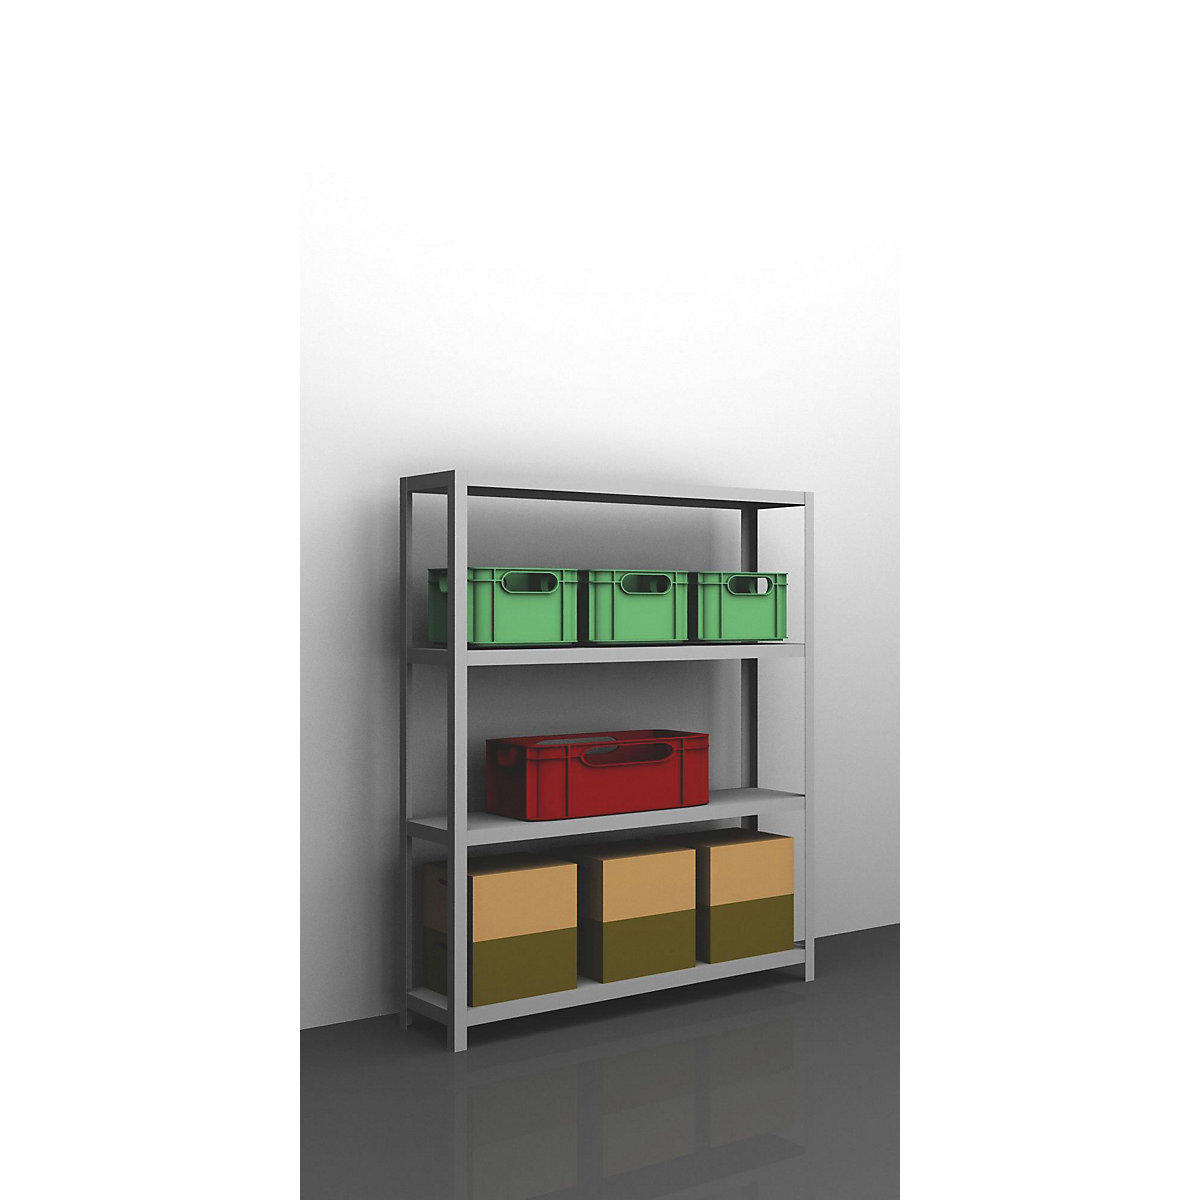 Bolt-together shelf unit, light duty, zinc plated – eurokraft pro, shelf unit height 1500 mm, shelf width 1300 mm, depth 300 mm, standard shelf unit-10